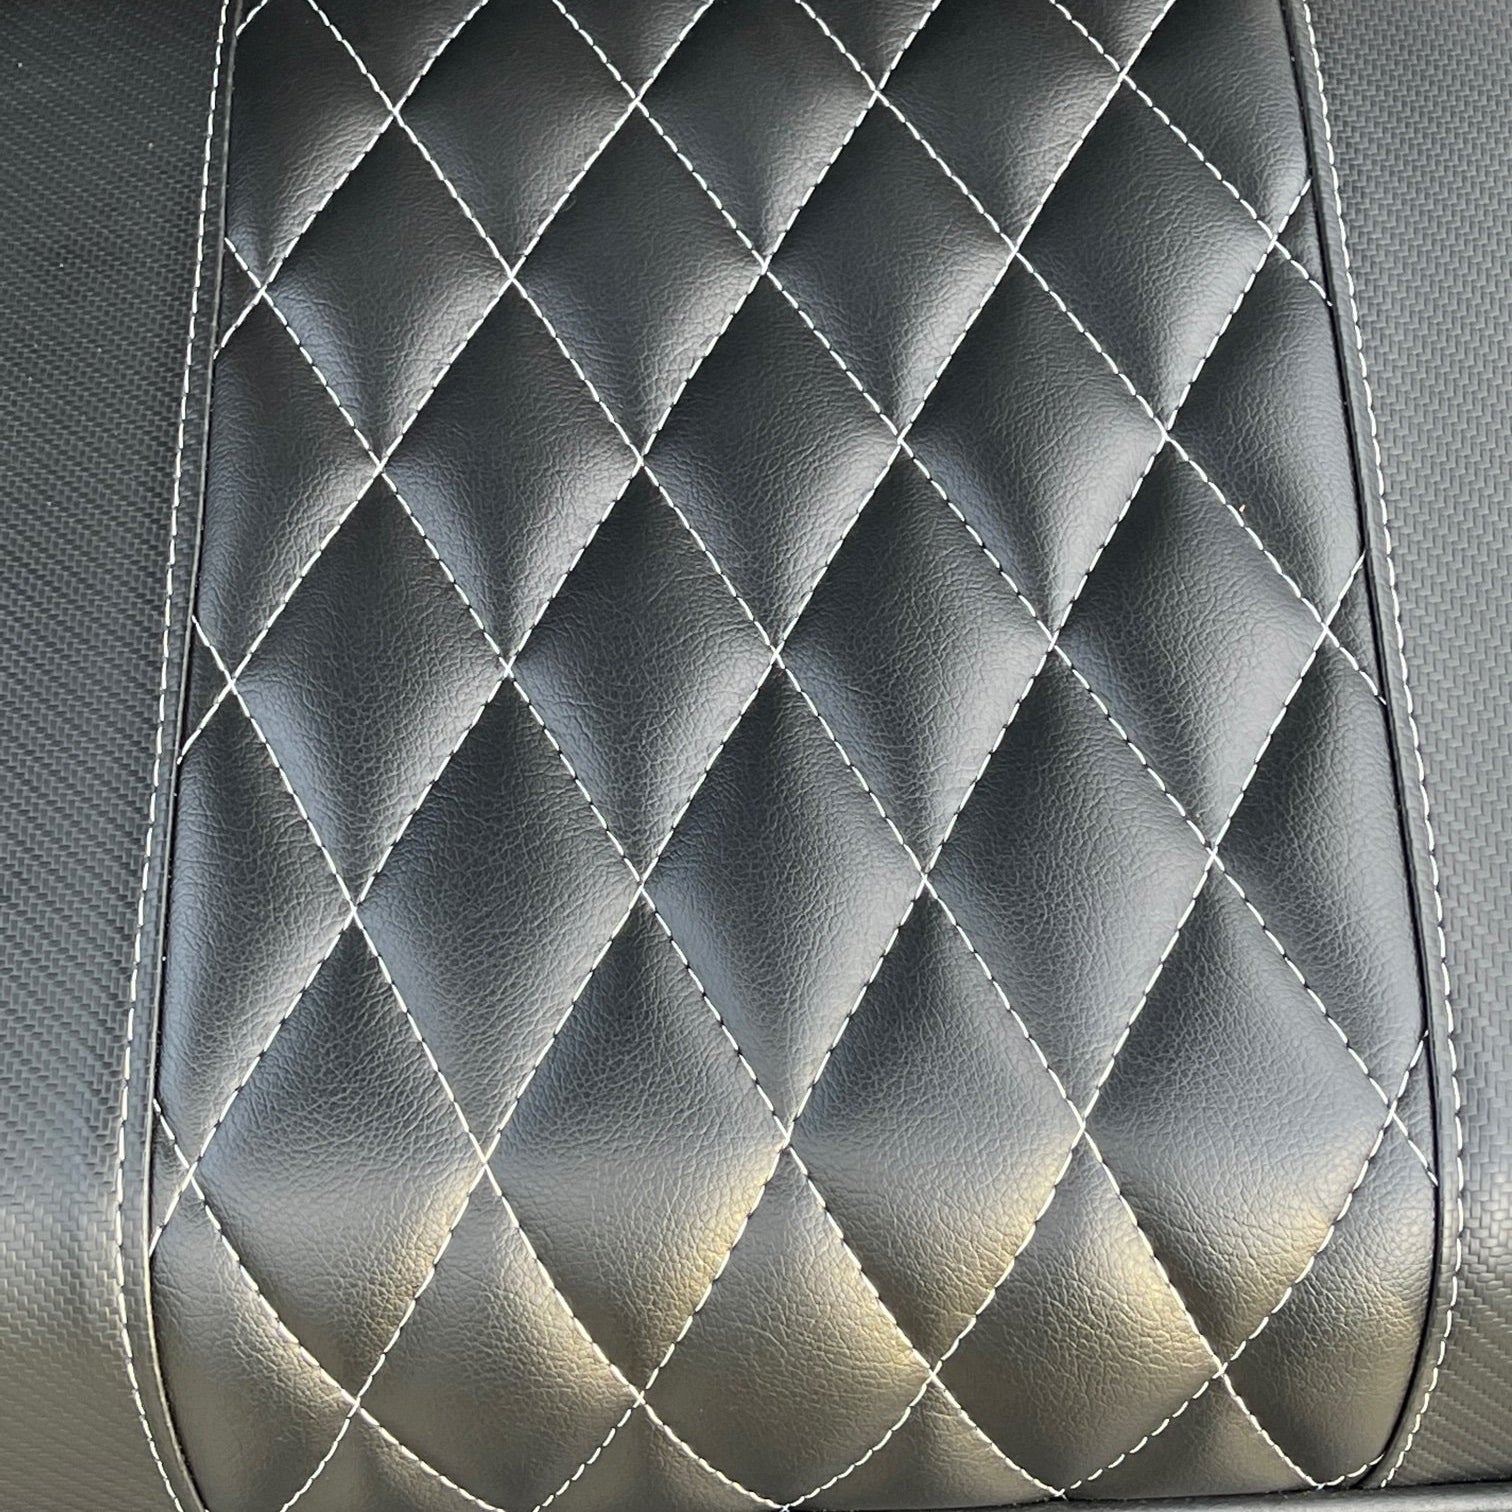 Advanced EV Advent 4 Passenger Seat Covers - Carbon Fiber Black and Diamond Black with White Stitching